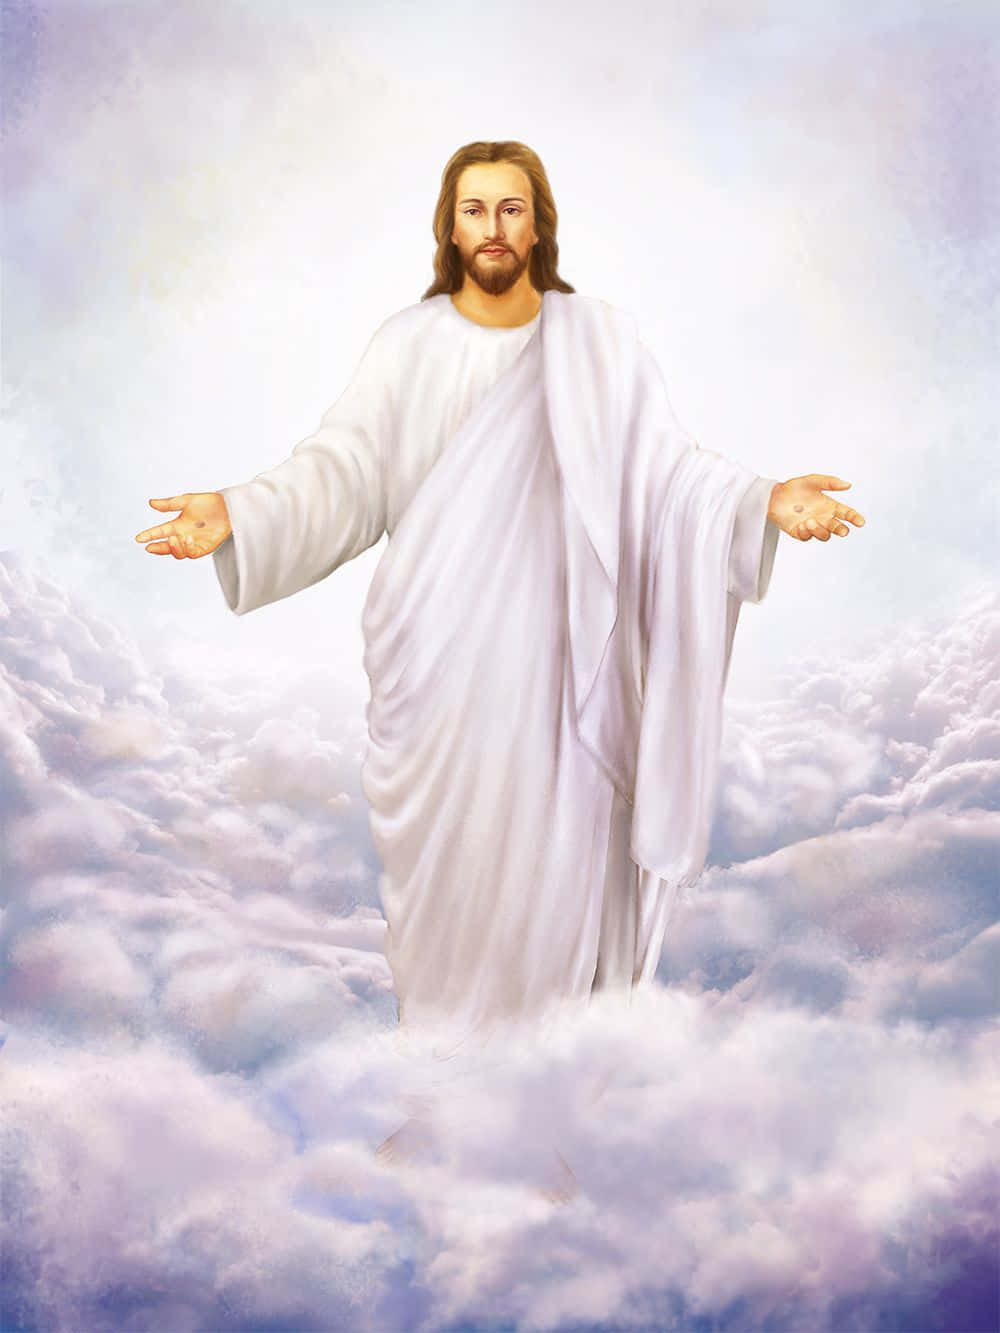 Risen Jesus Christ picture